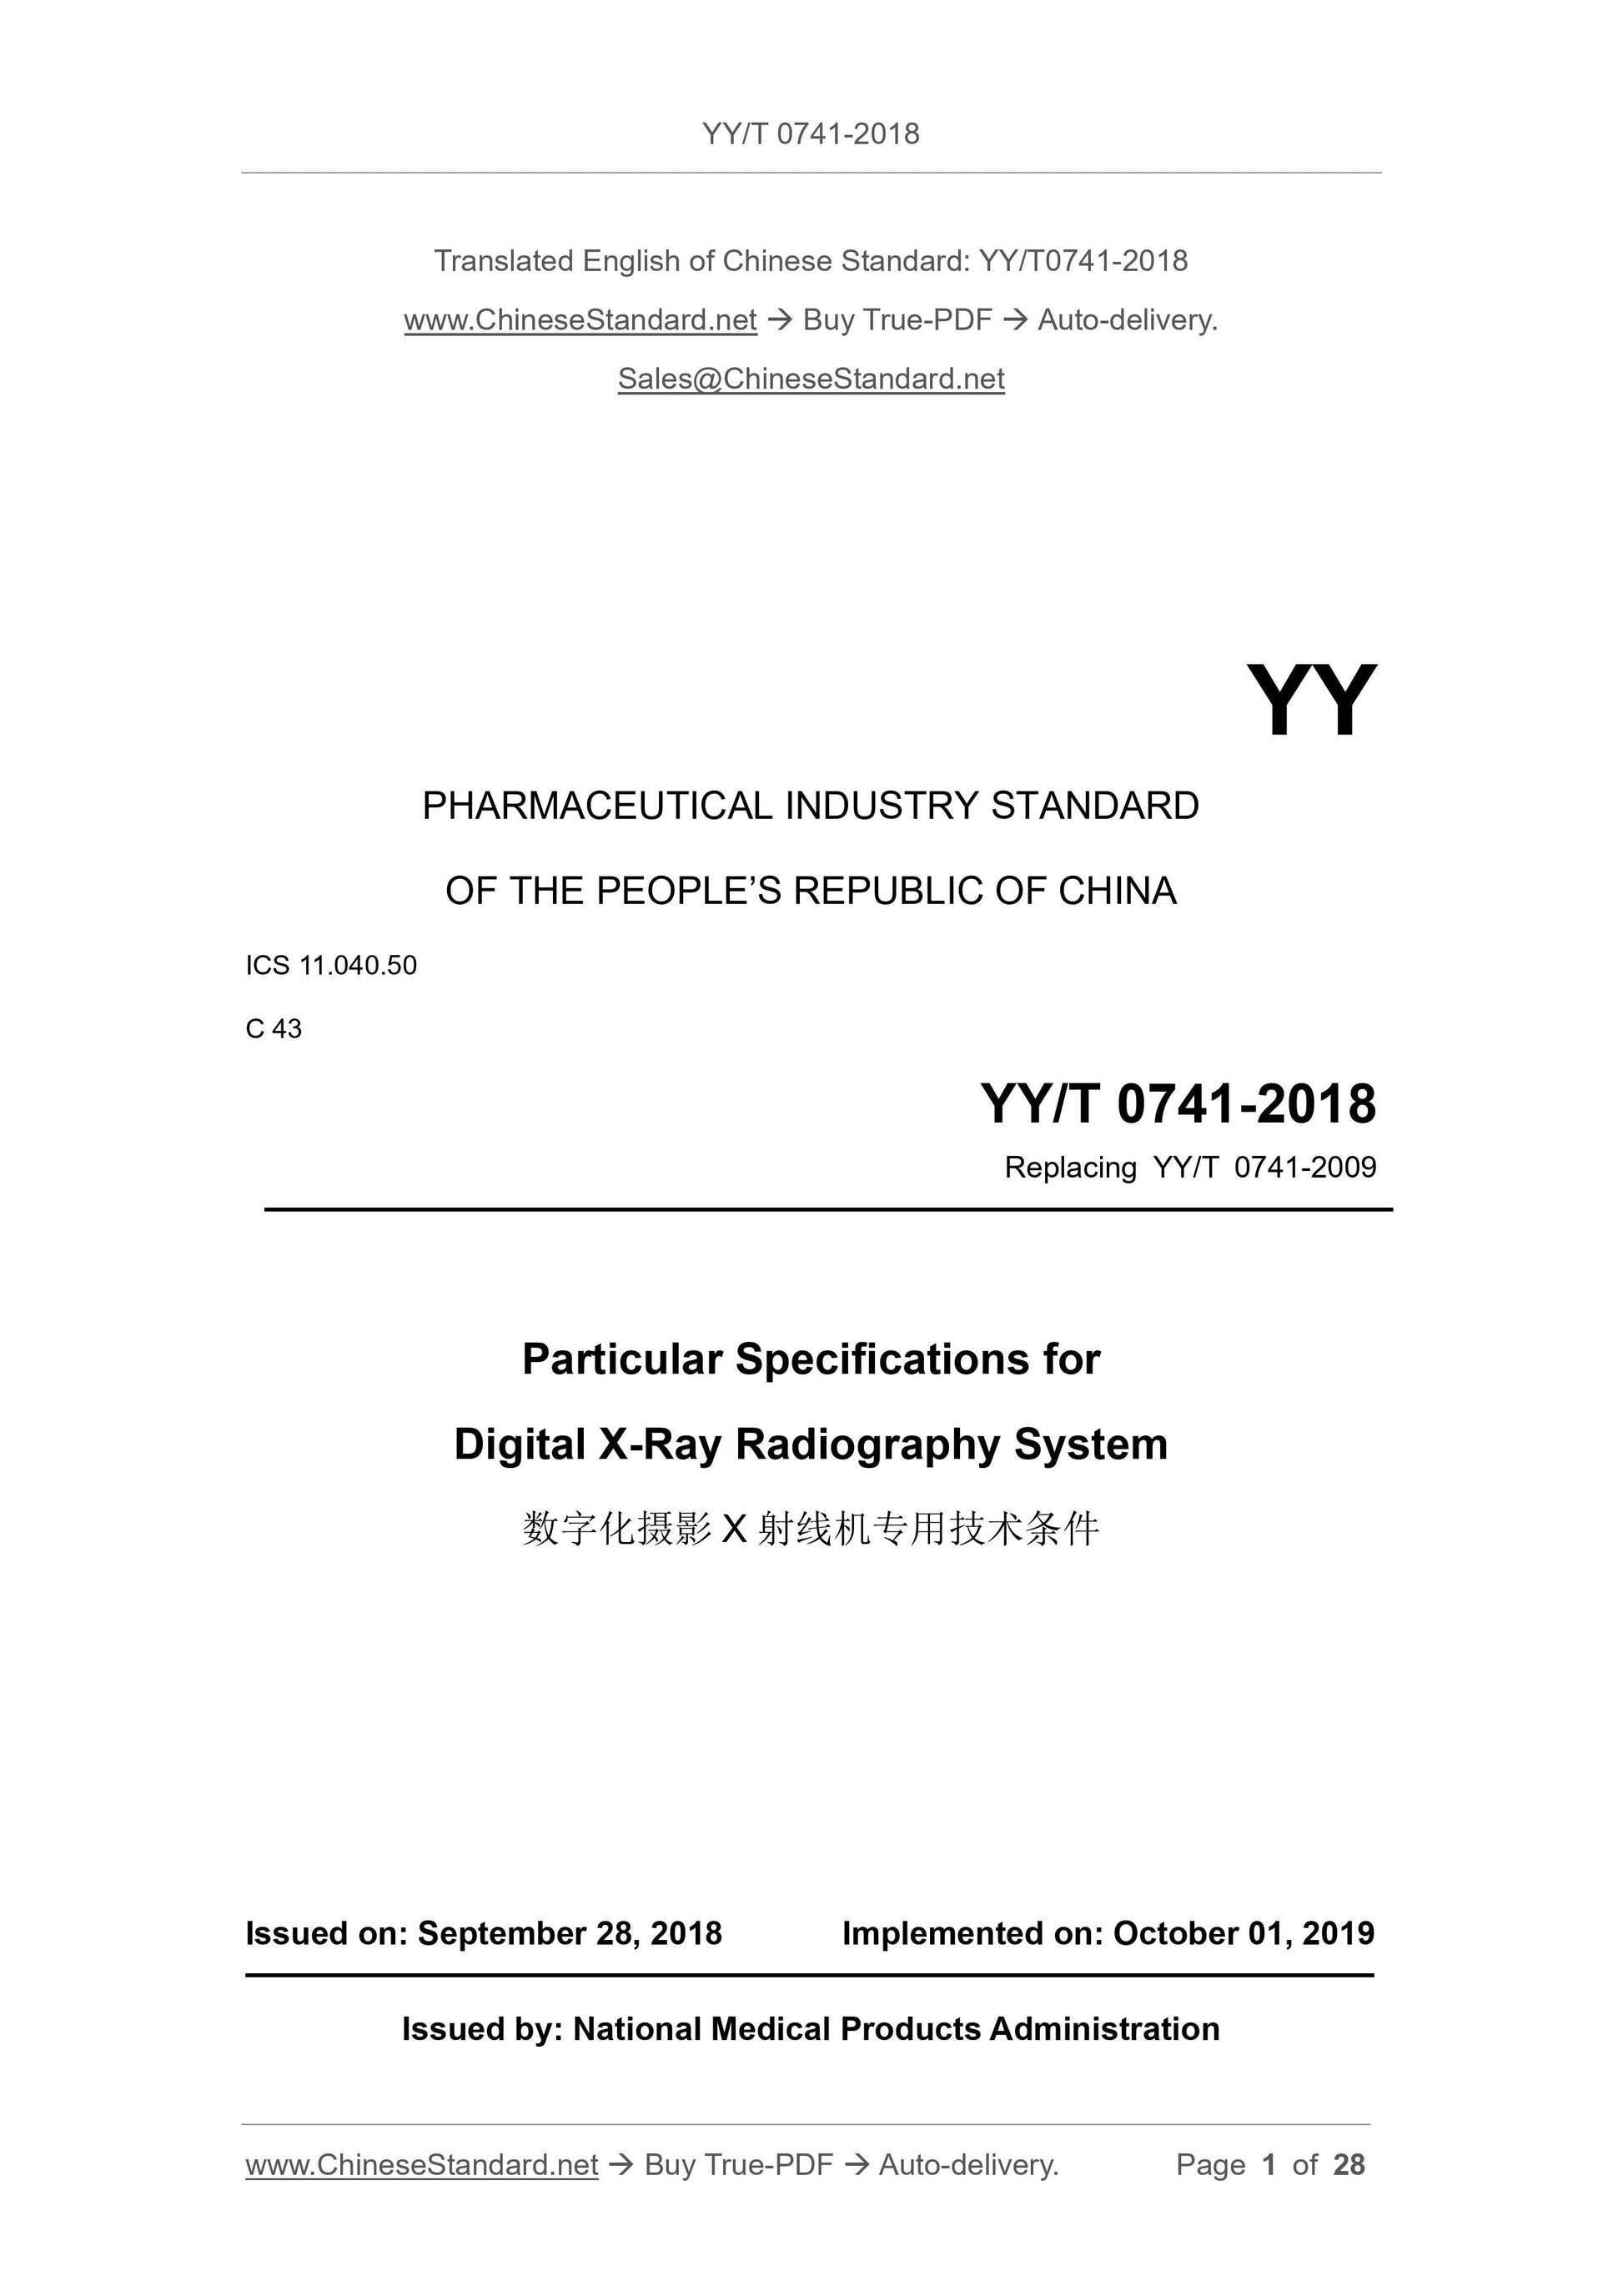 YY/T 0741-2018 Page 1